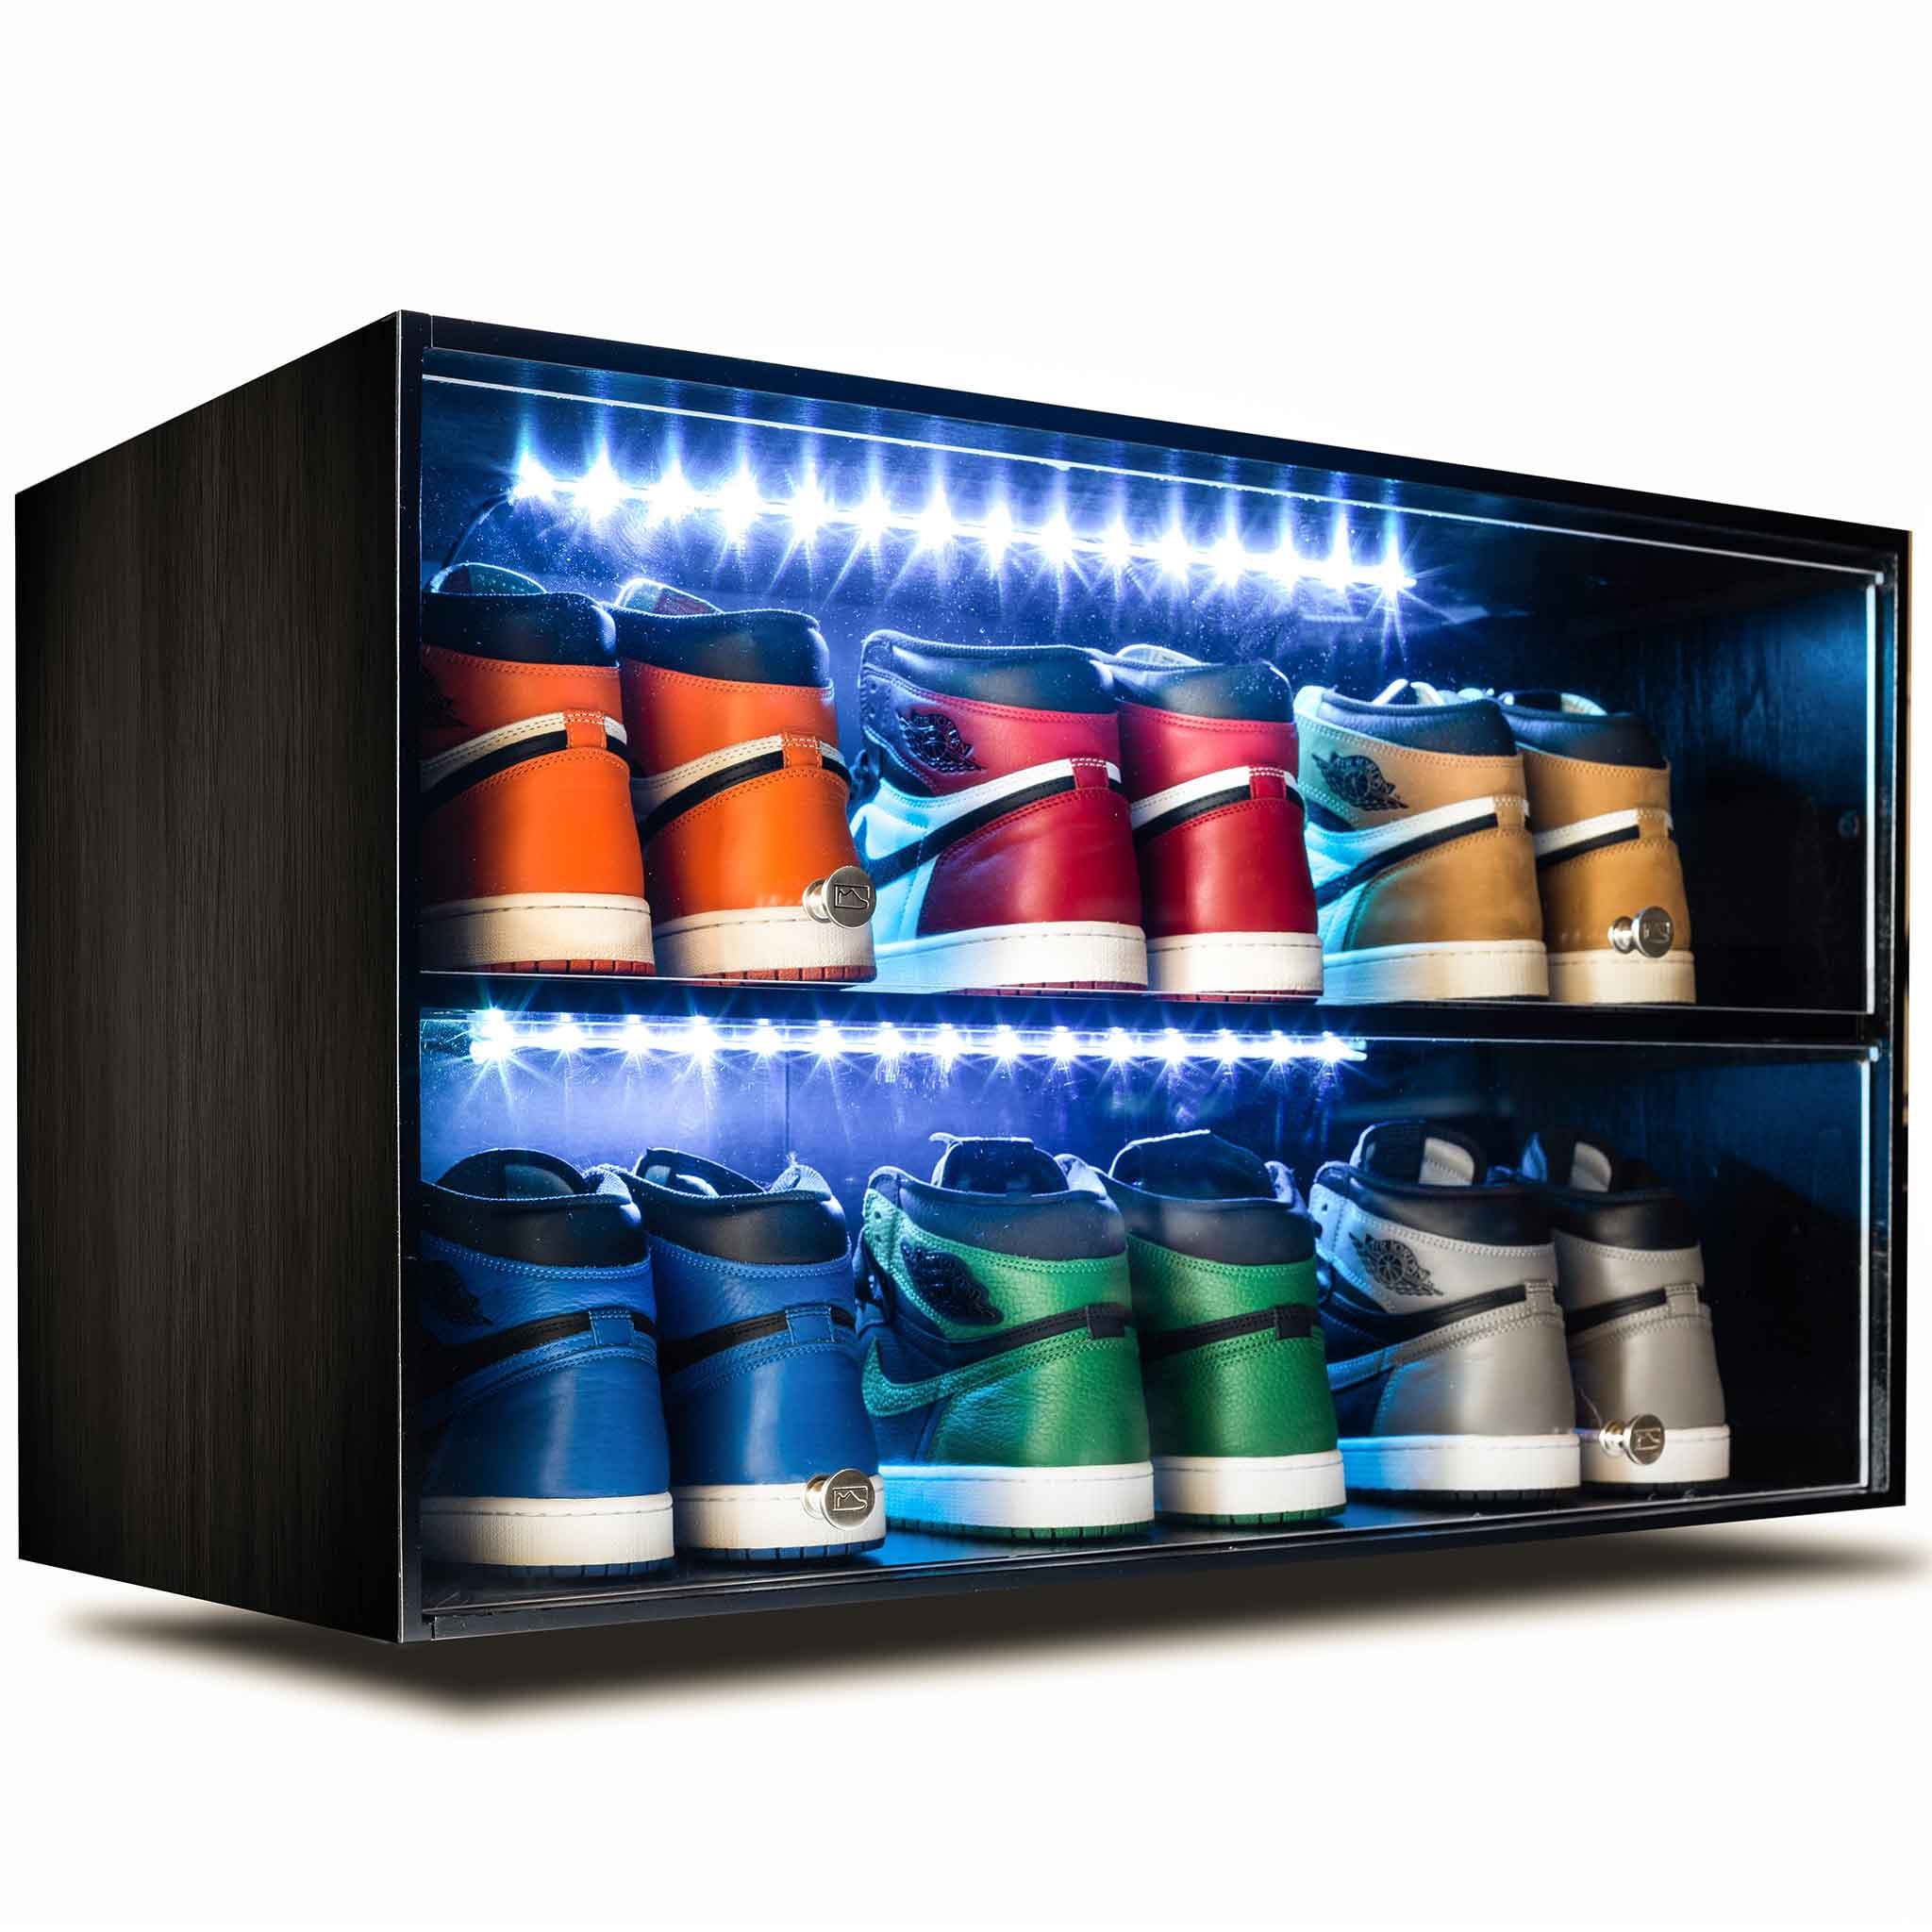 Shoe Display Shelves - LED Shelving - Products & Ideas